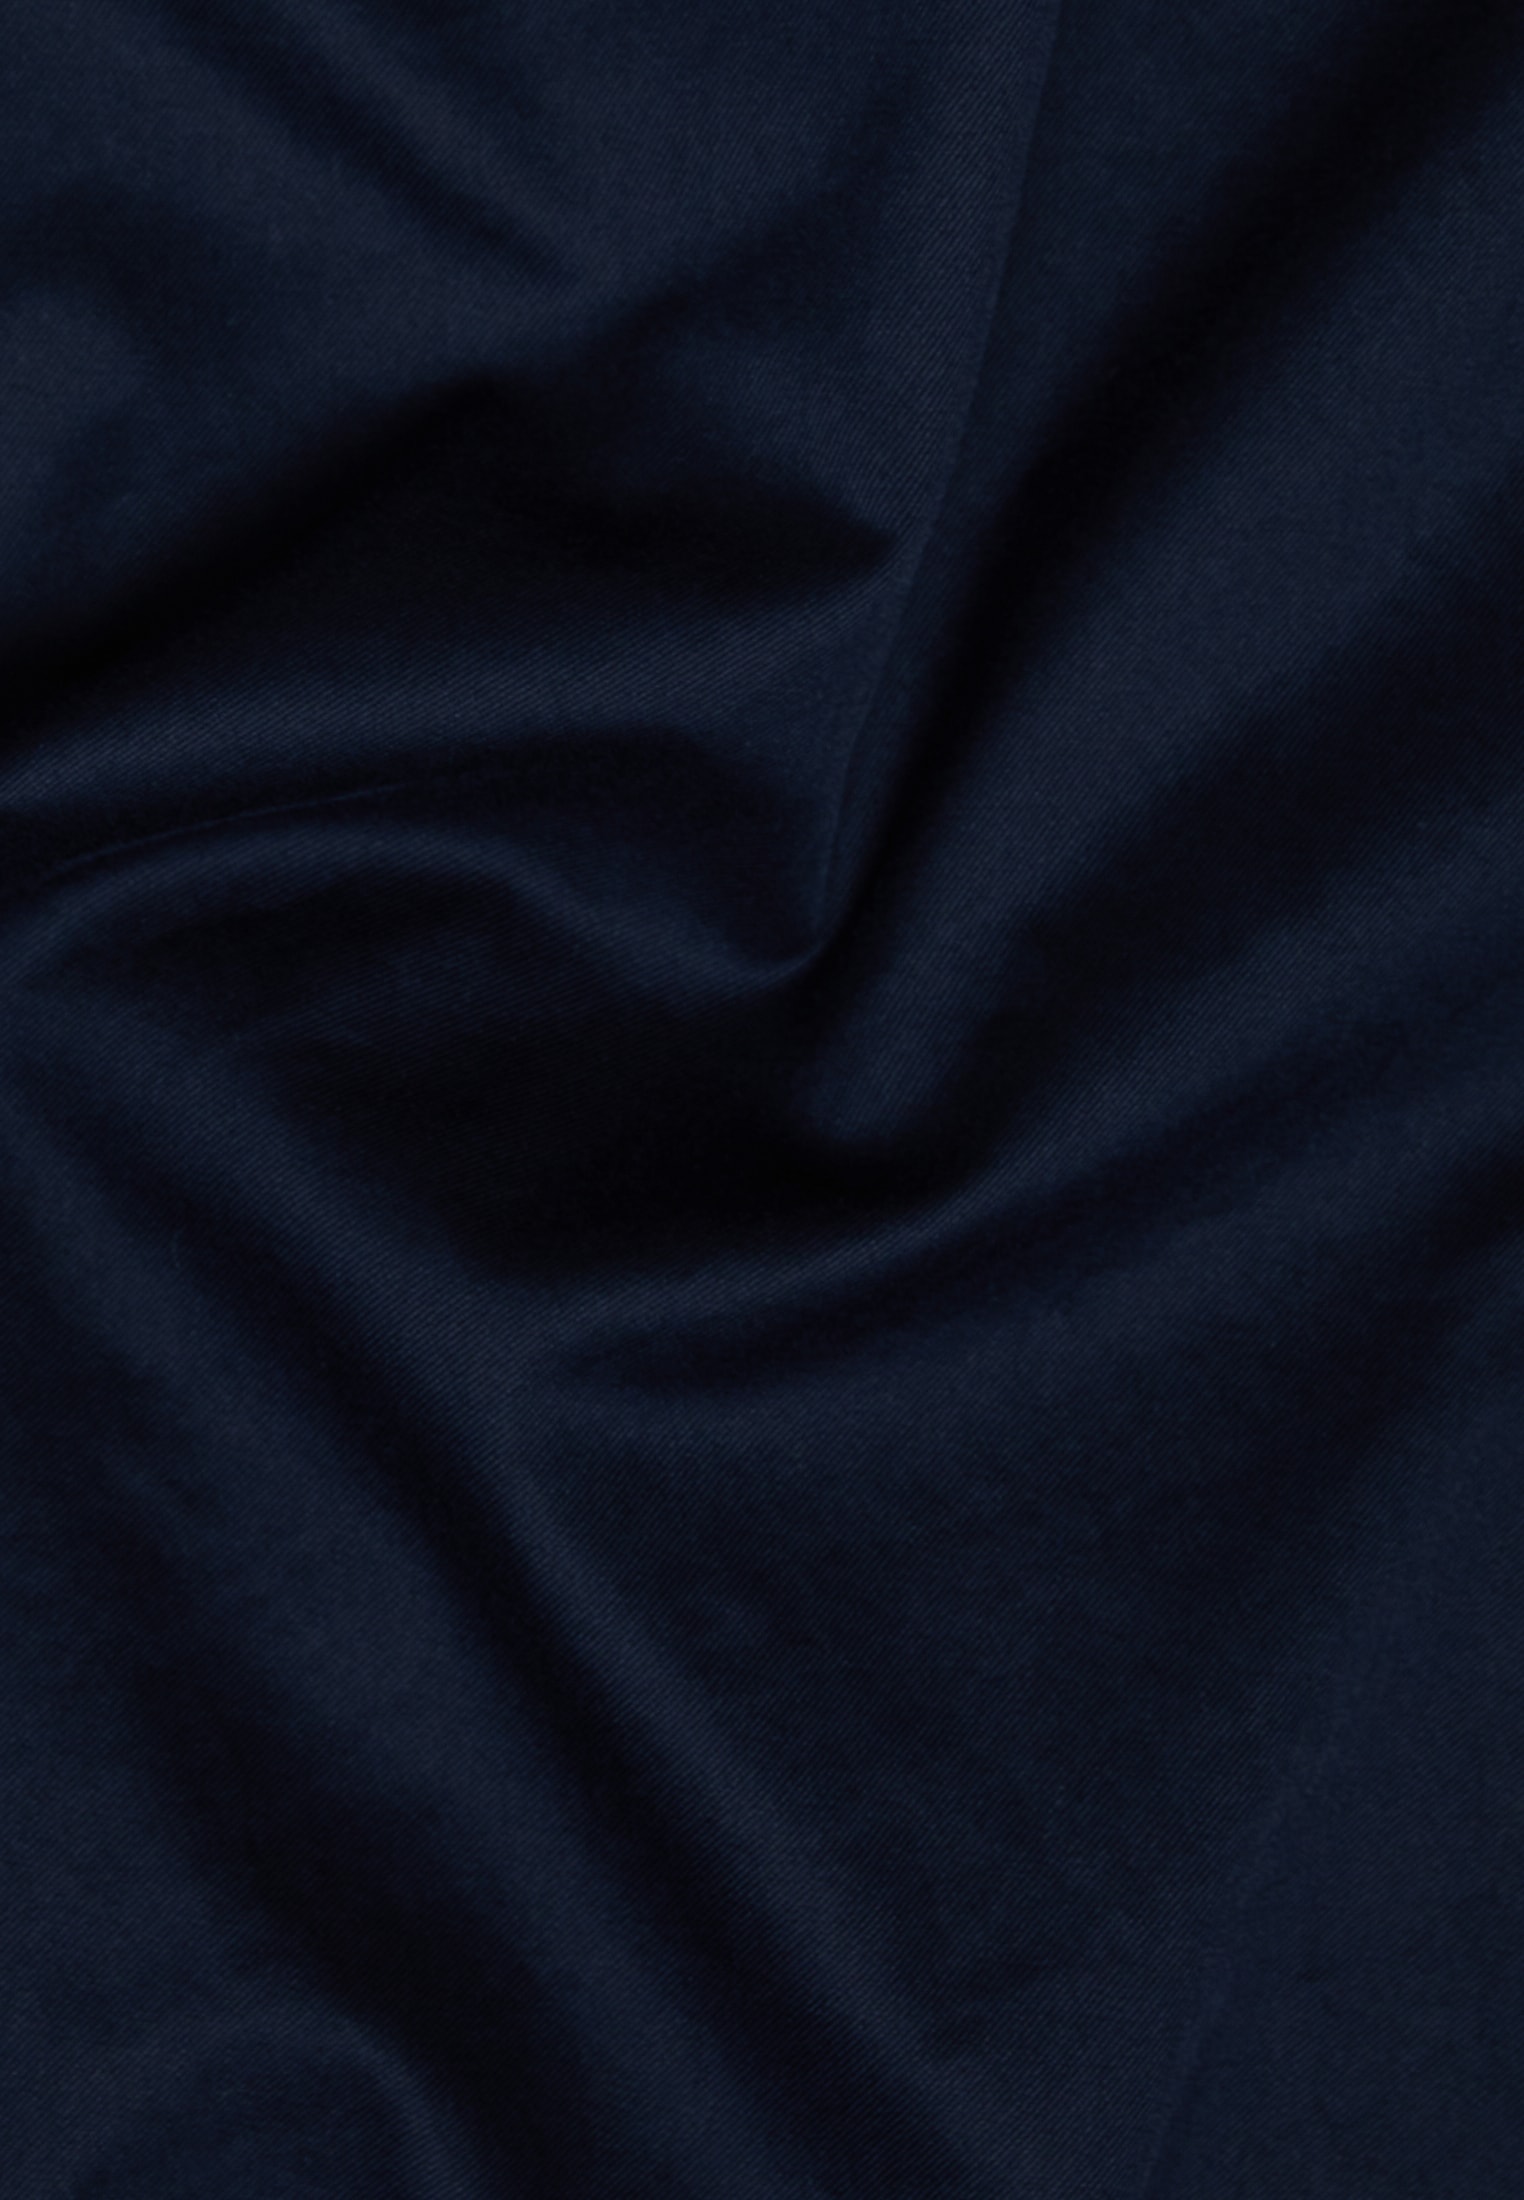 Soft Luxury Shirt Bluse in navy unifarben